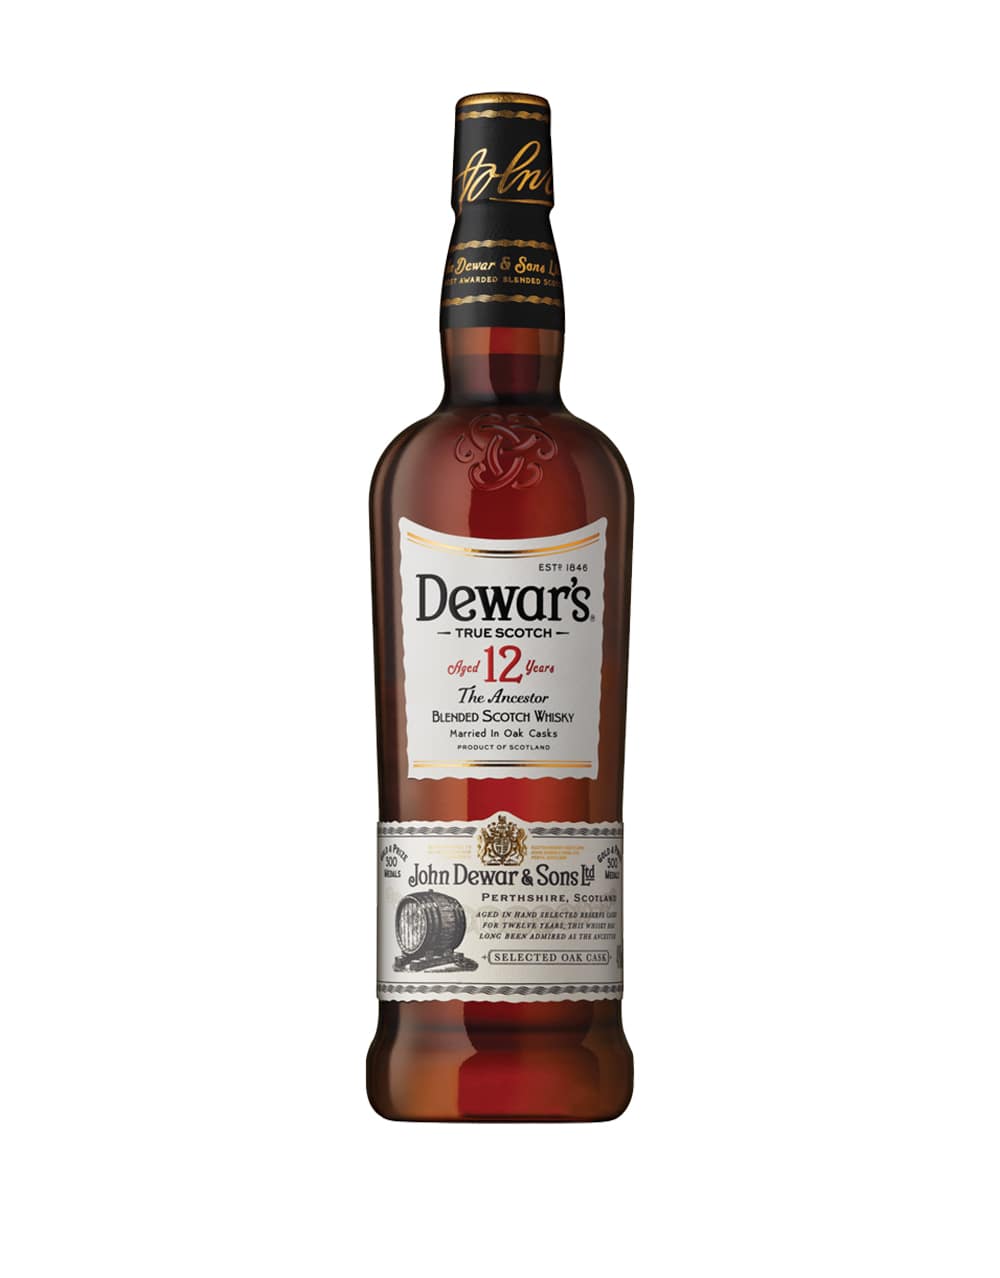 DEWARS 12 Year Old Scotch Whisky